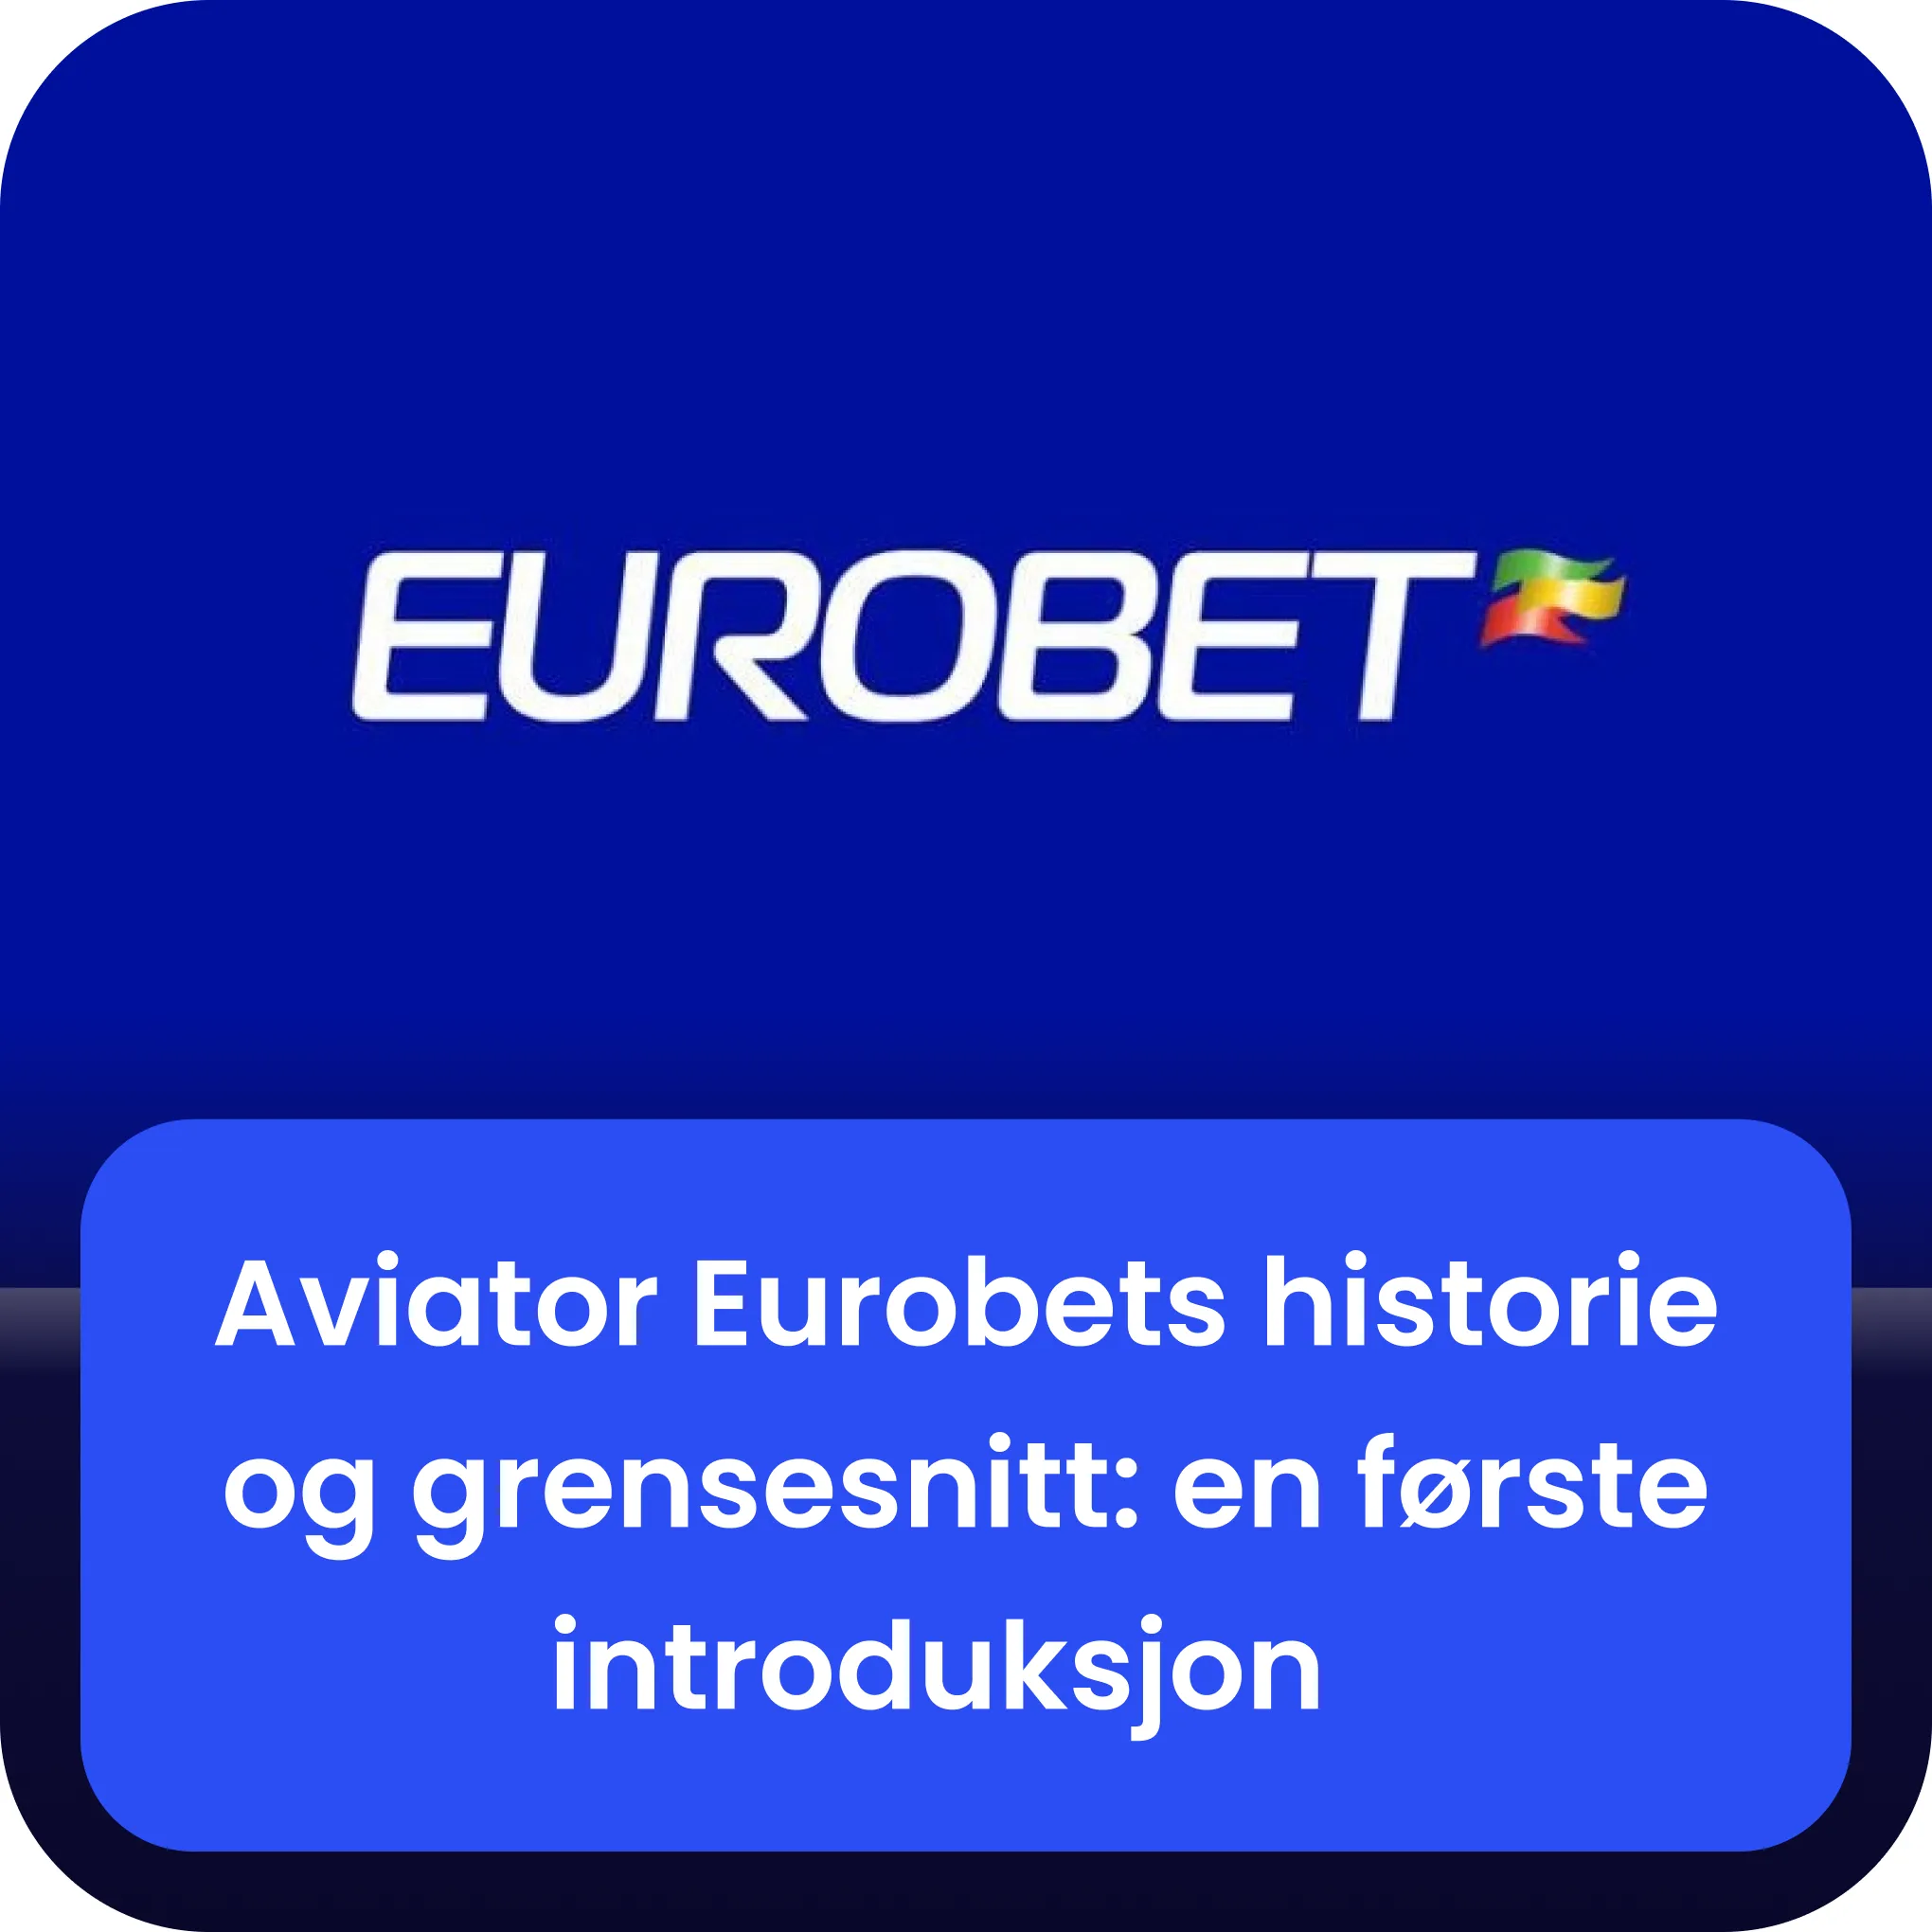 eurobet aviator handling